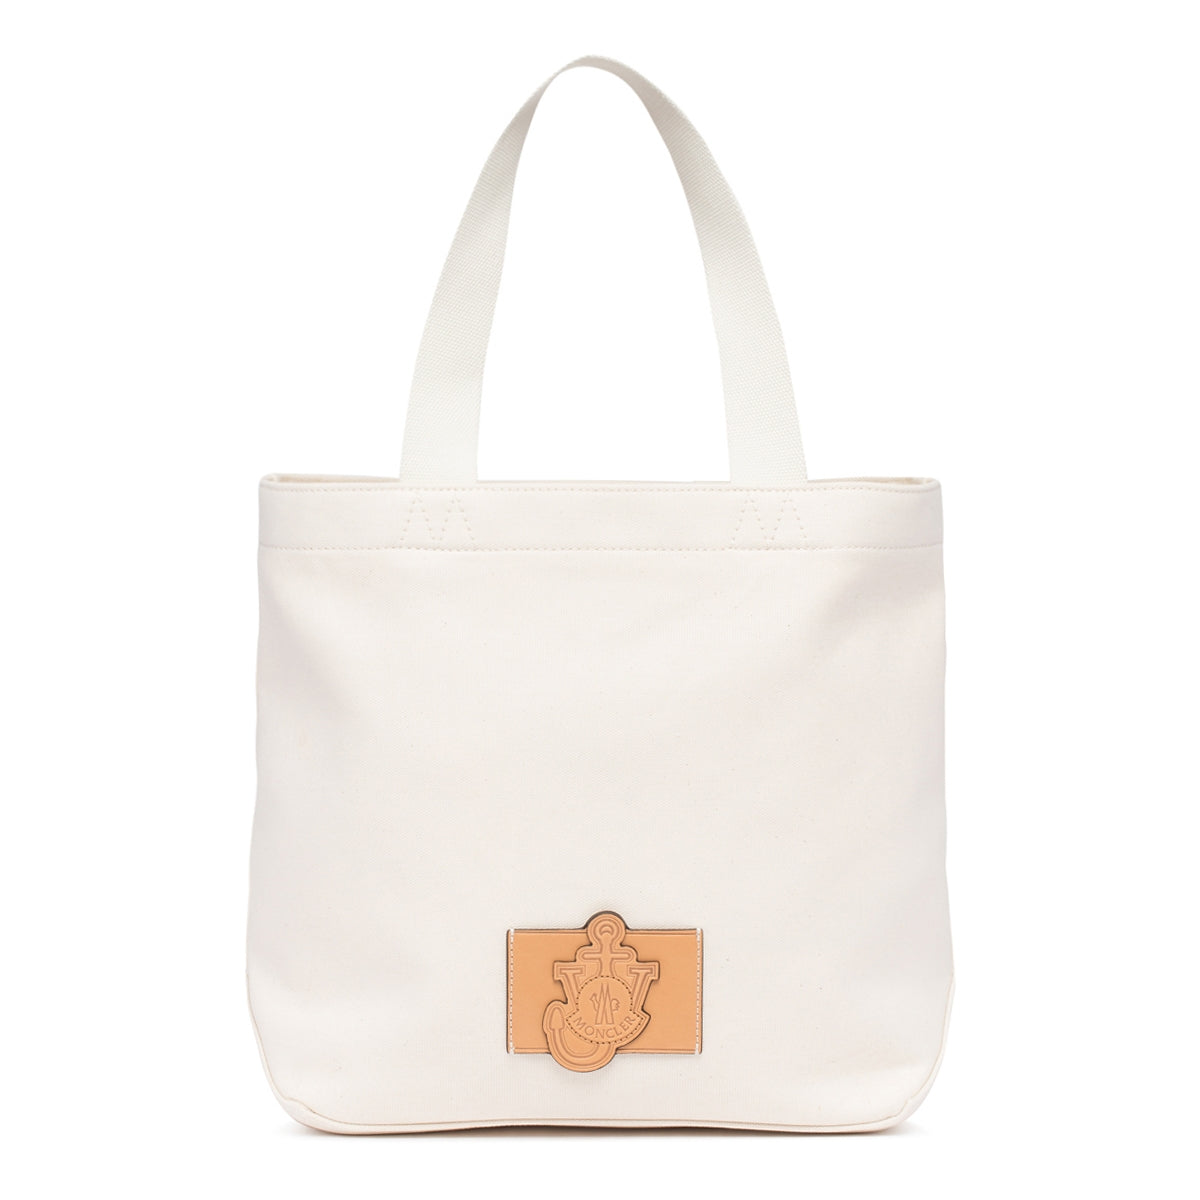 Moncler Genius JW Anderson<BR/>Medium shopping bag